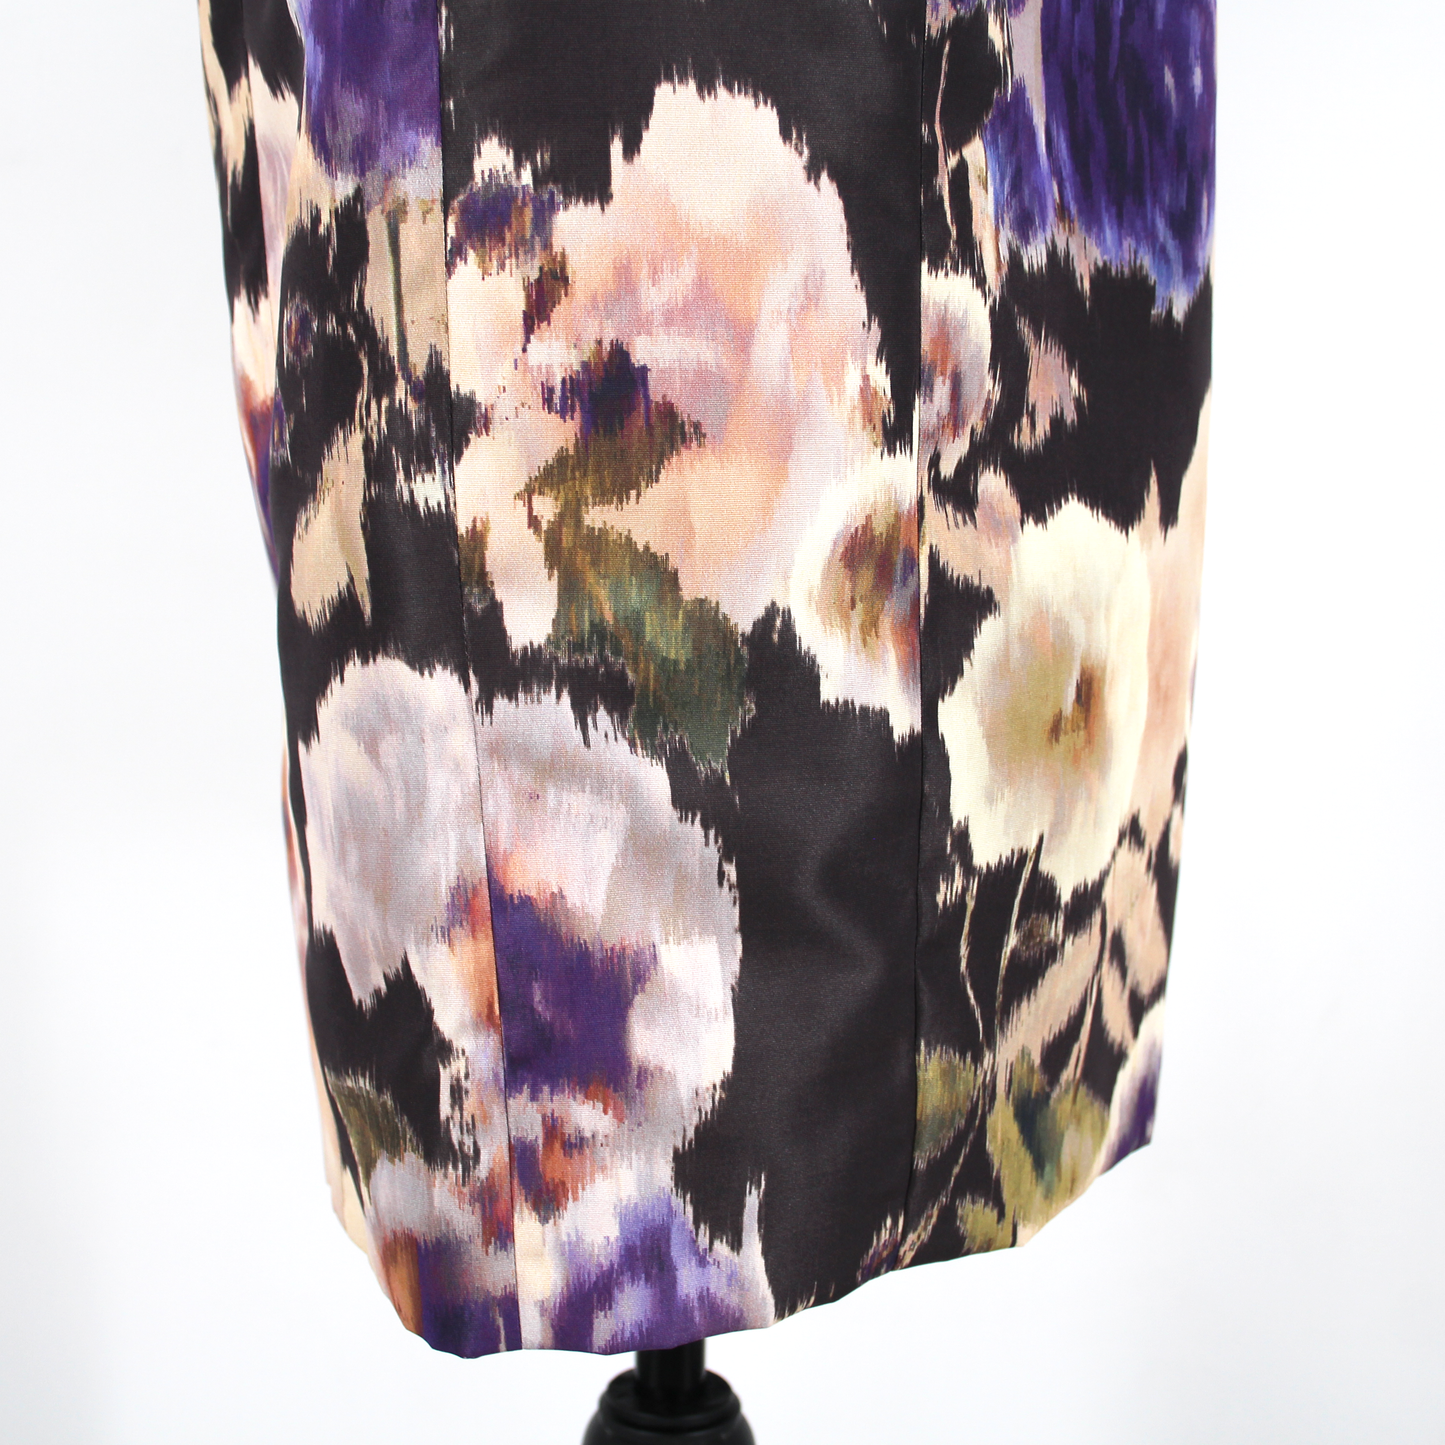 Dior Floral Sleeveless Dress